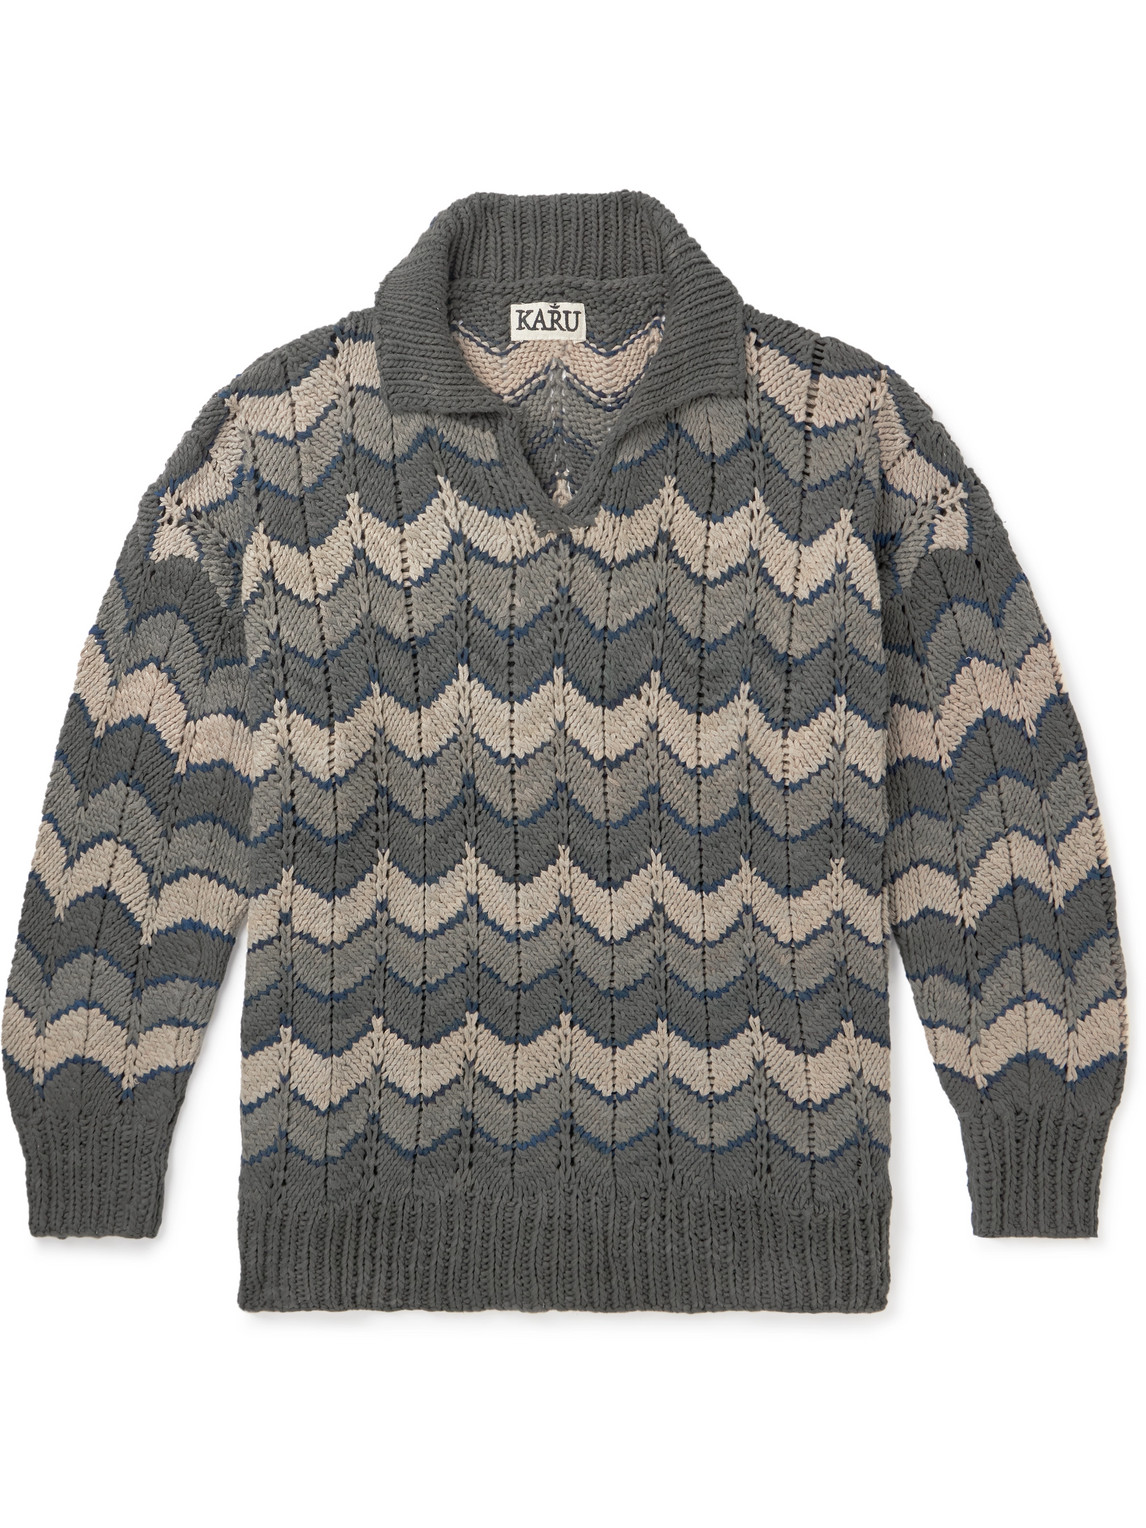 Karu Research Chevron Cotton Sweater In Gray